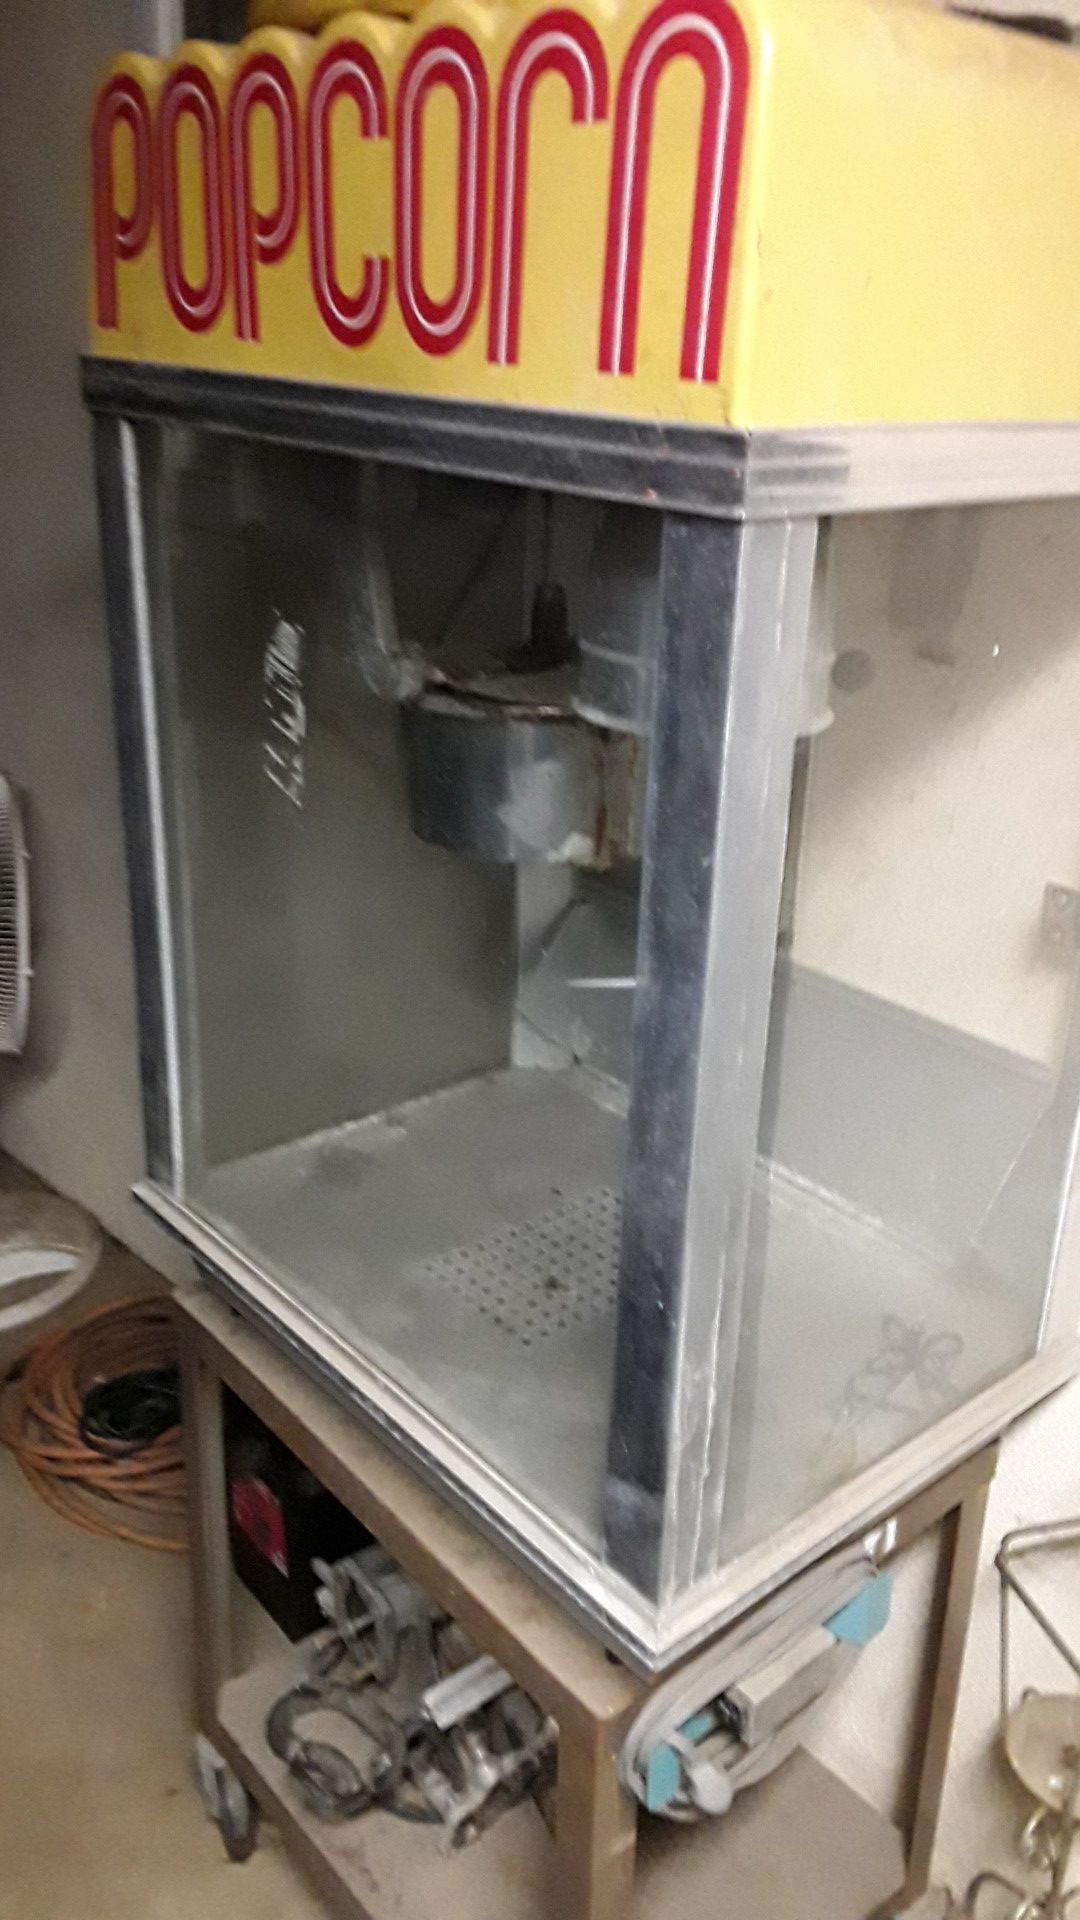 Commercial popcorn machine $100